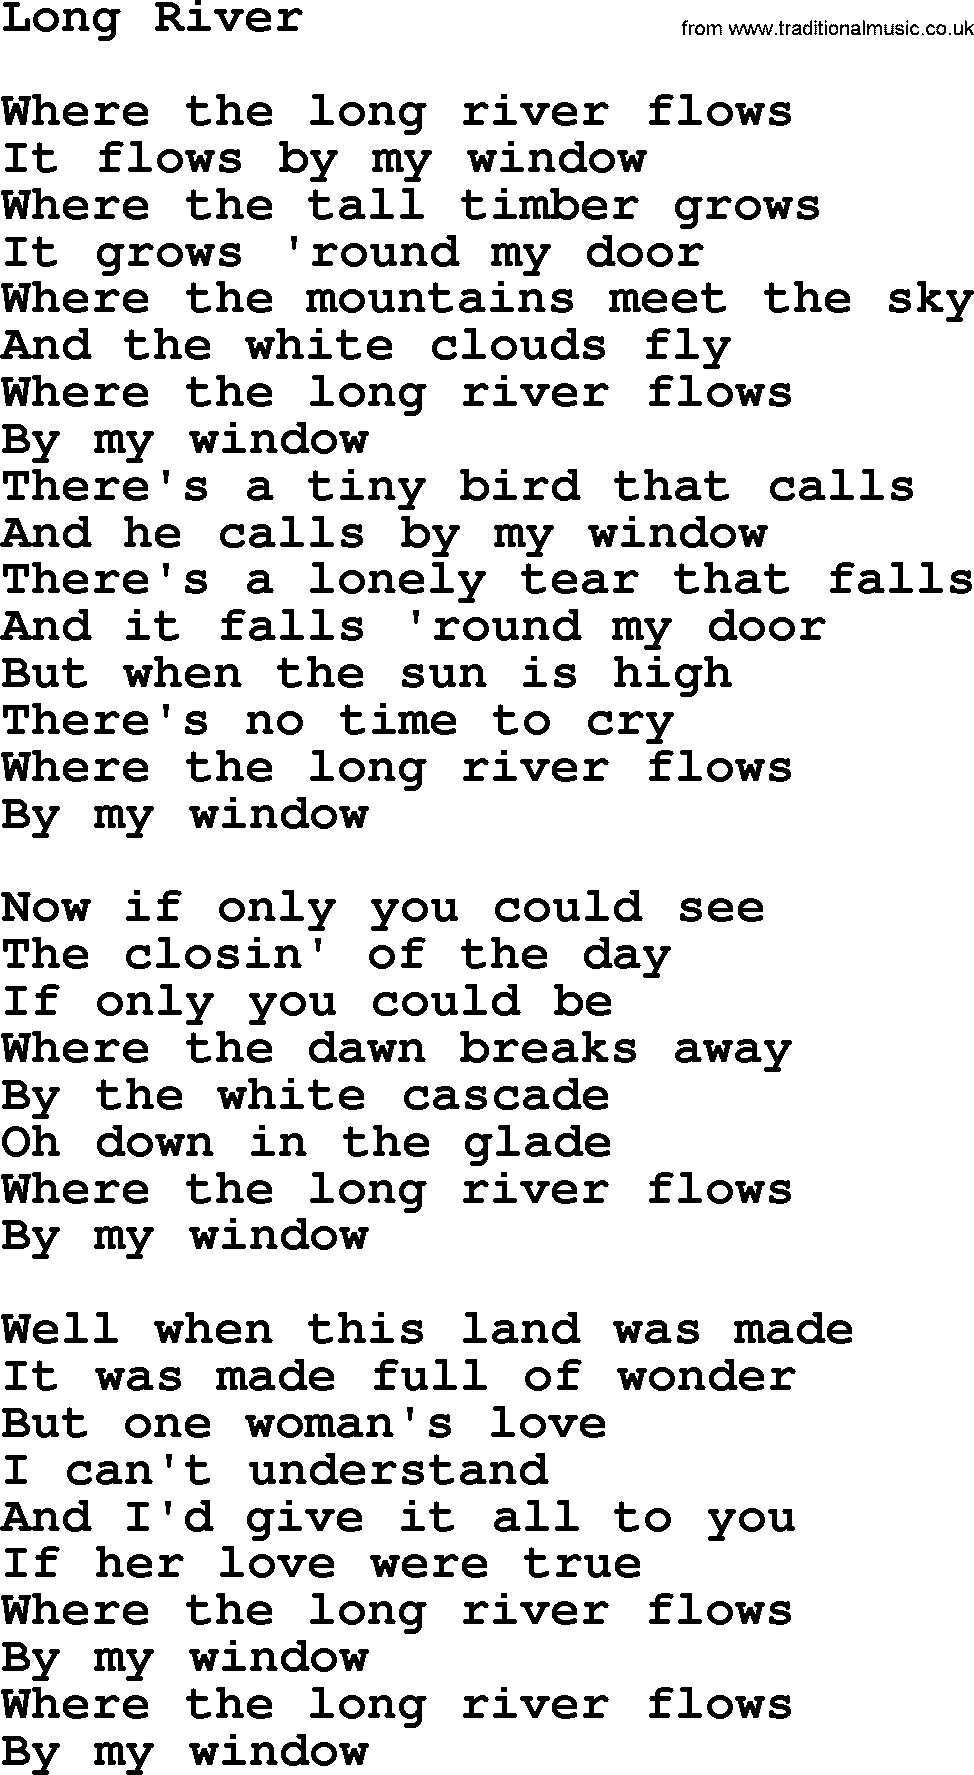 Gordon Lightfoot song Long River, lyrics